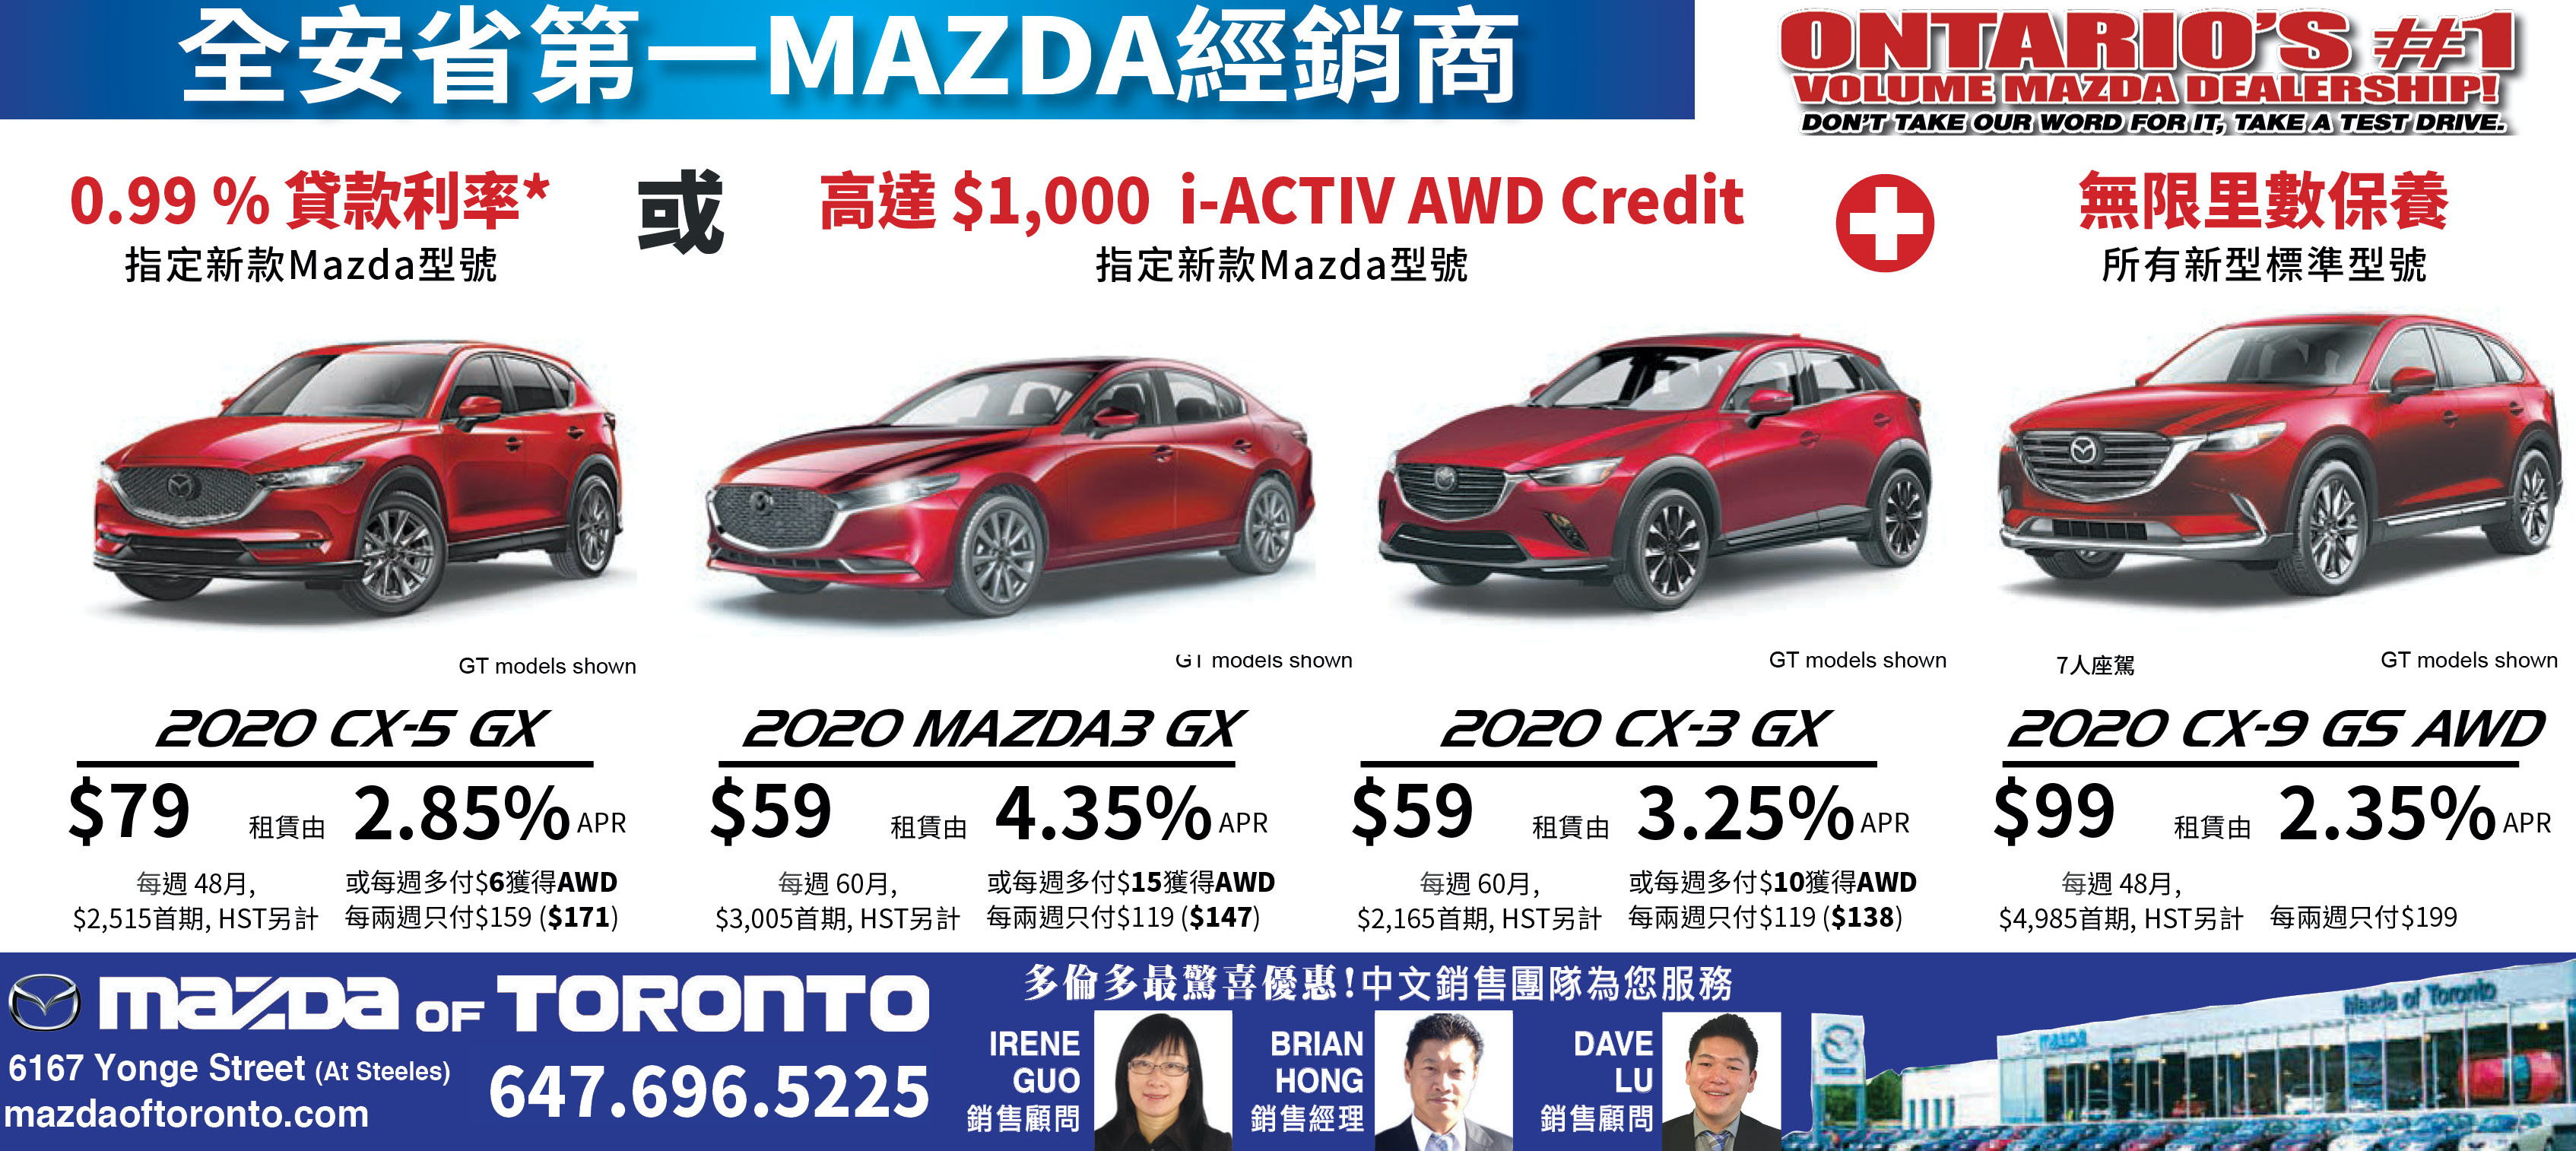 MazdaToronto_4HC_20200117_Auto Web.jpg